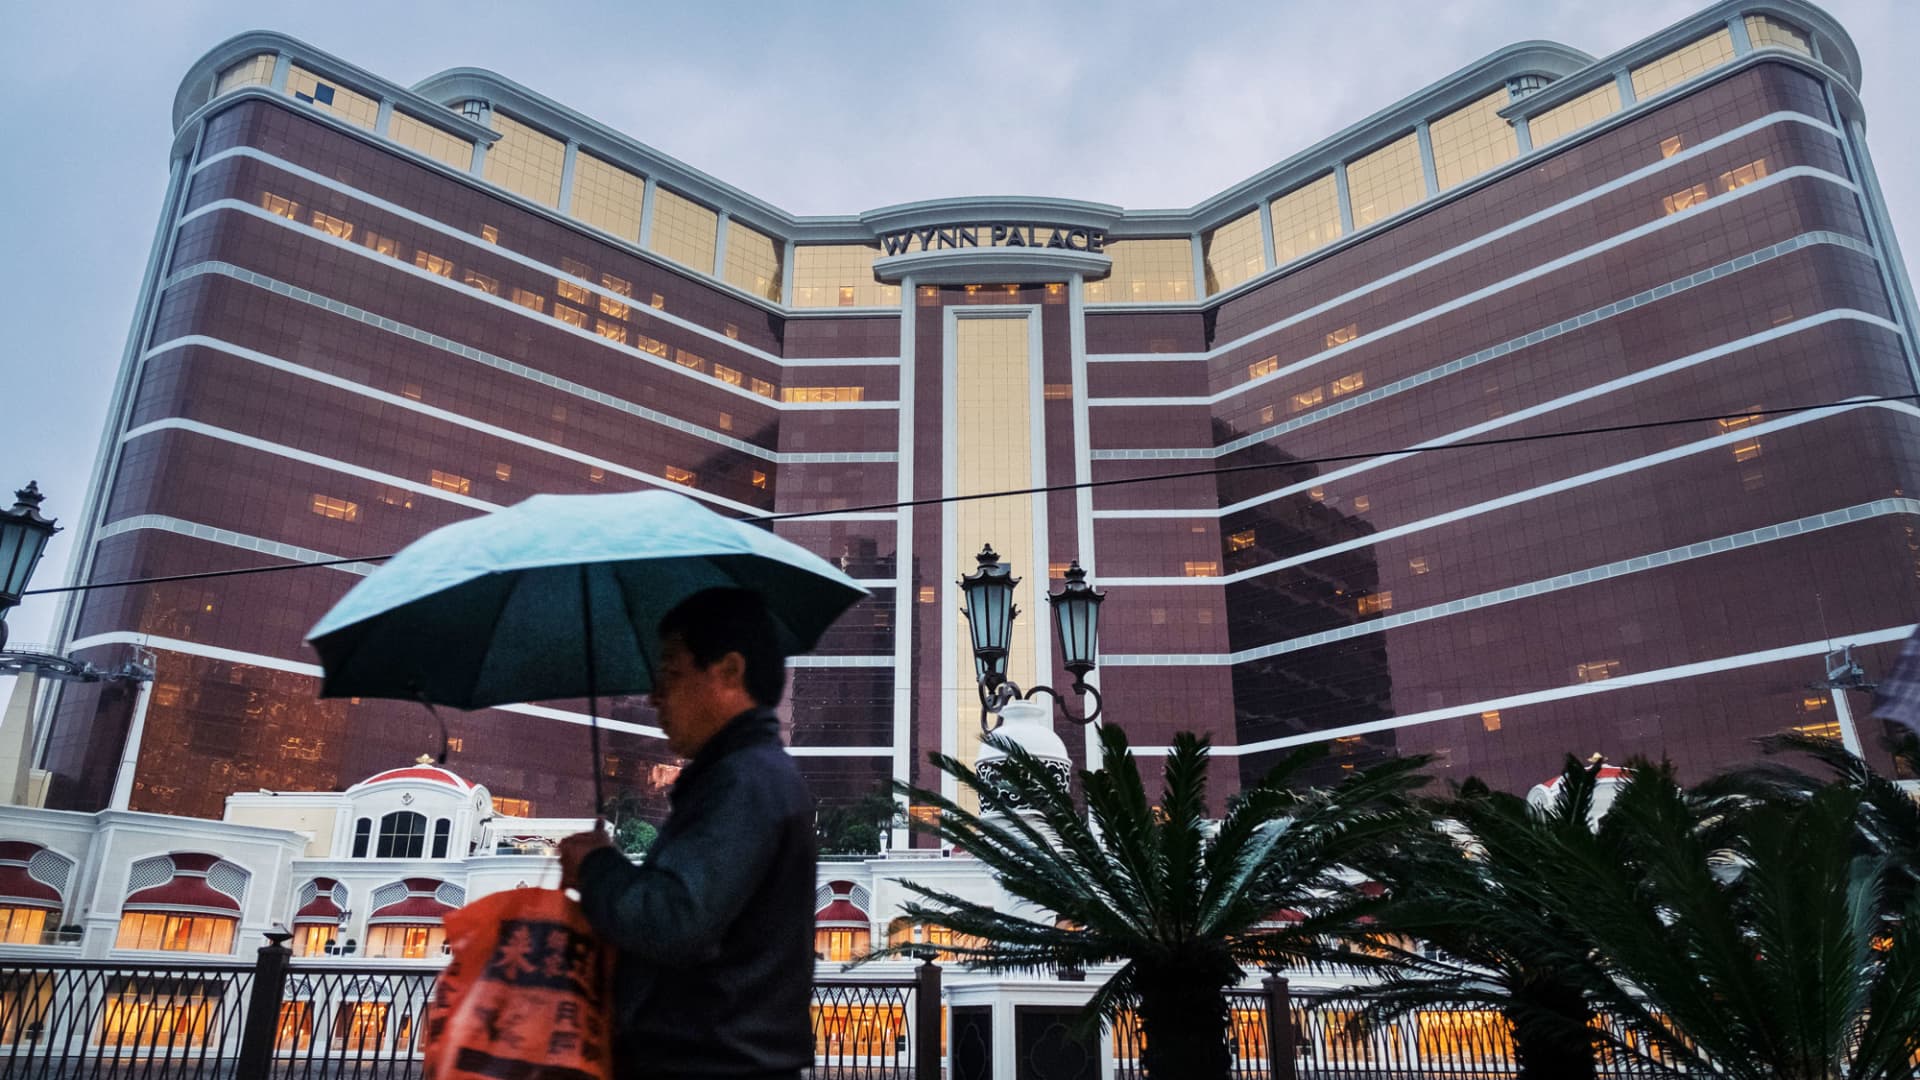 A pedestrian with an umbrella walks in front of the Wynn Palace casino resort, operated by Wynn Resorts Ltd., in Macau, China, Jan. 31, 2018.